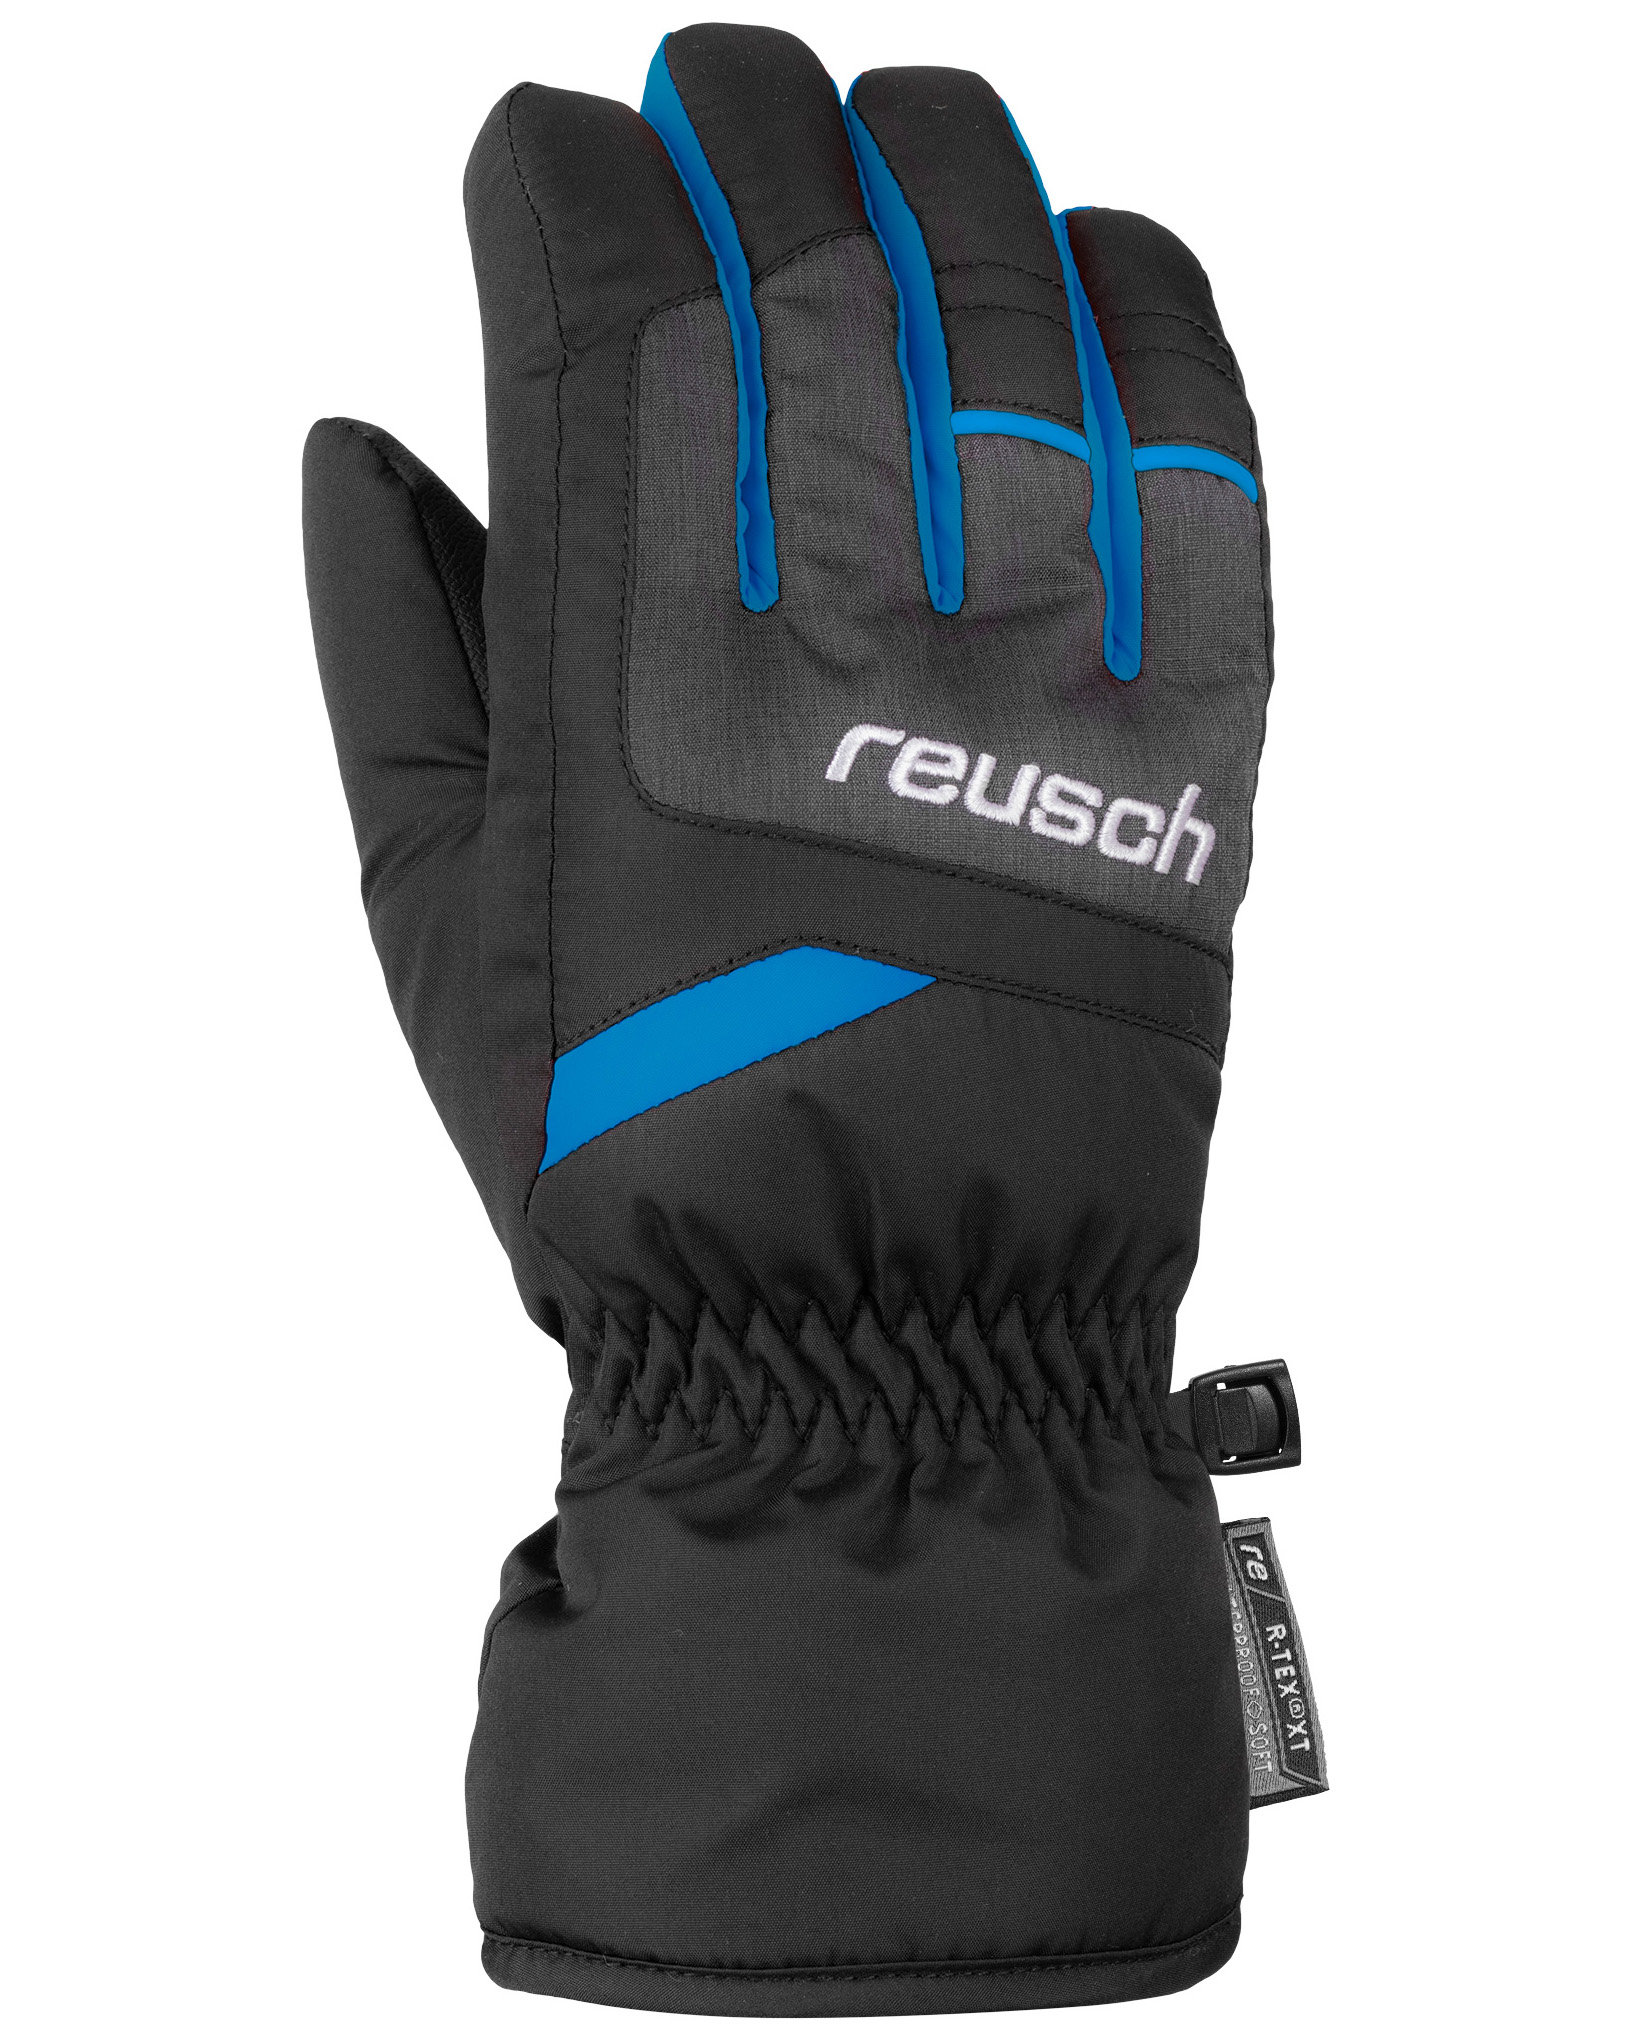 Перчатки Reusch Bennet R-Tex® Xt, black/black melange/brilliant blue, 6.5 Inch варежки reusch bennet r tex® xt black black melange pink glo 6 inch